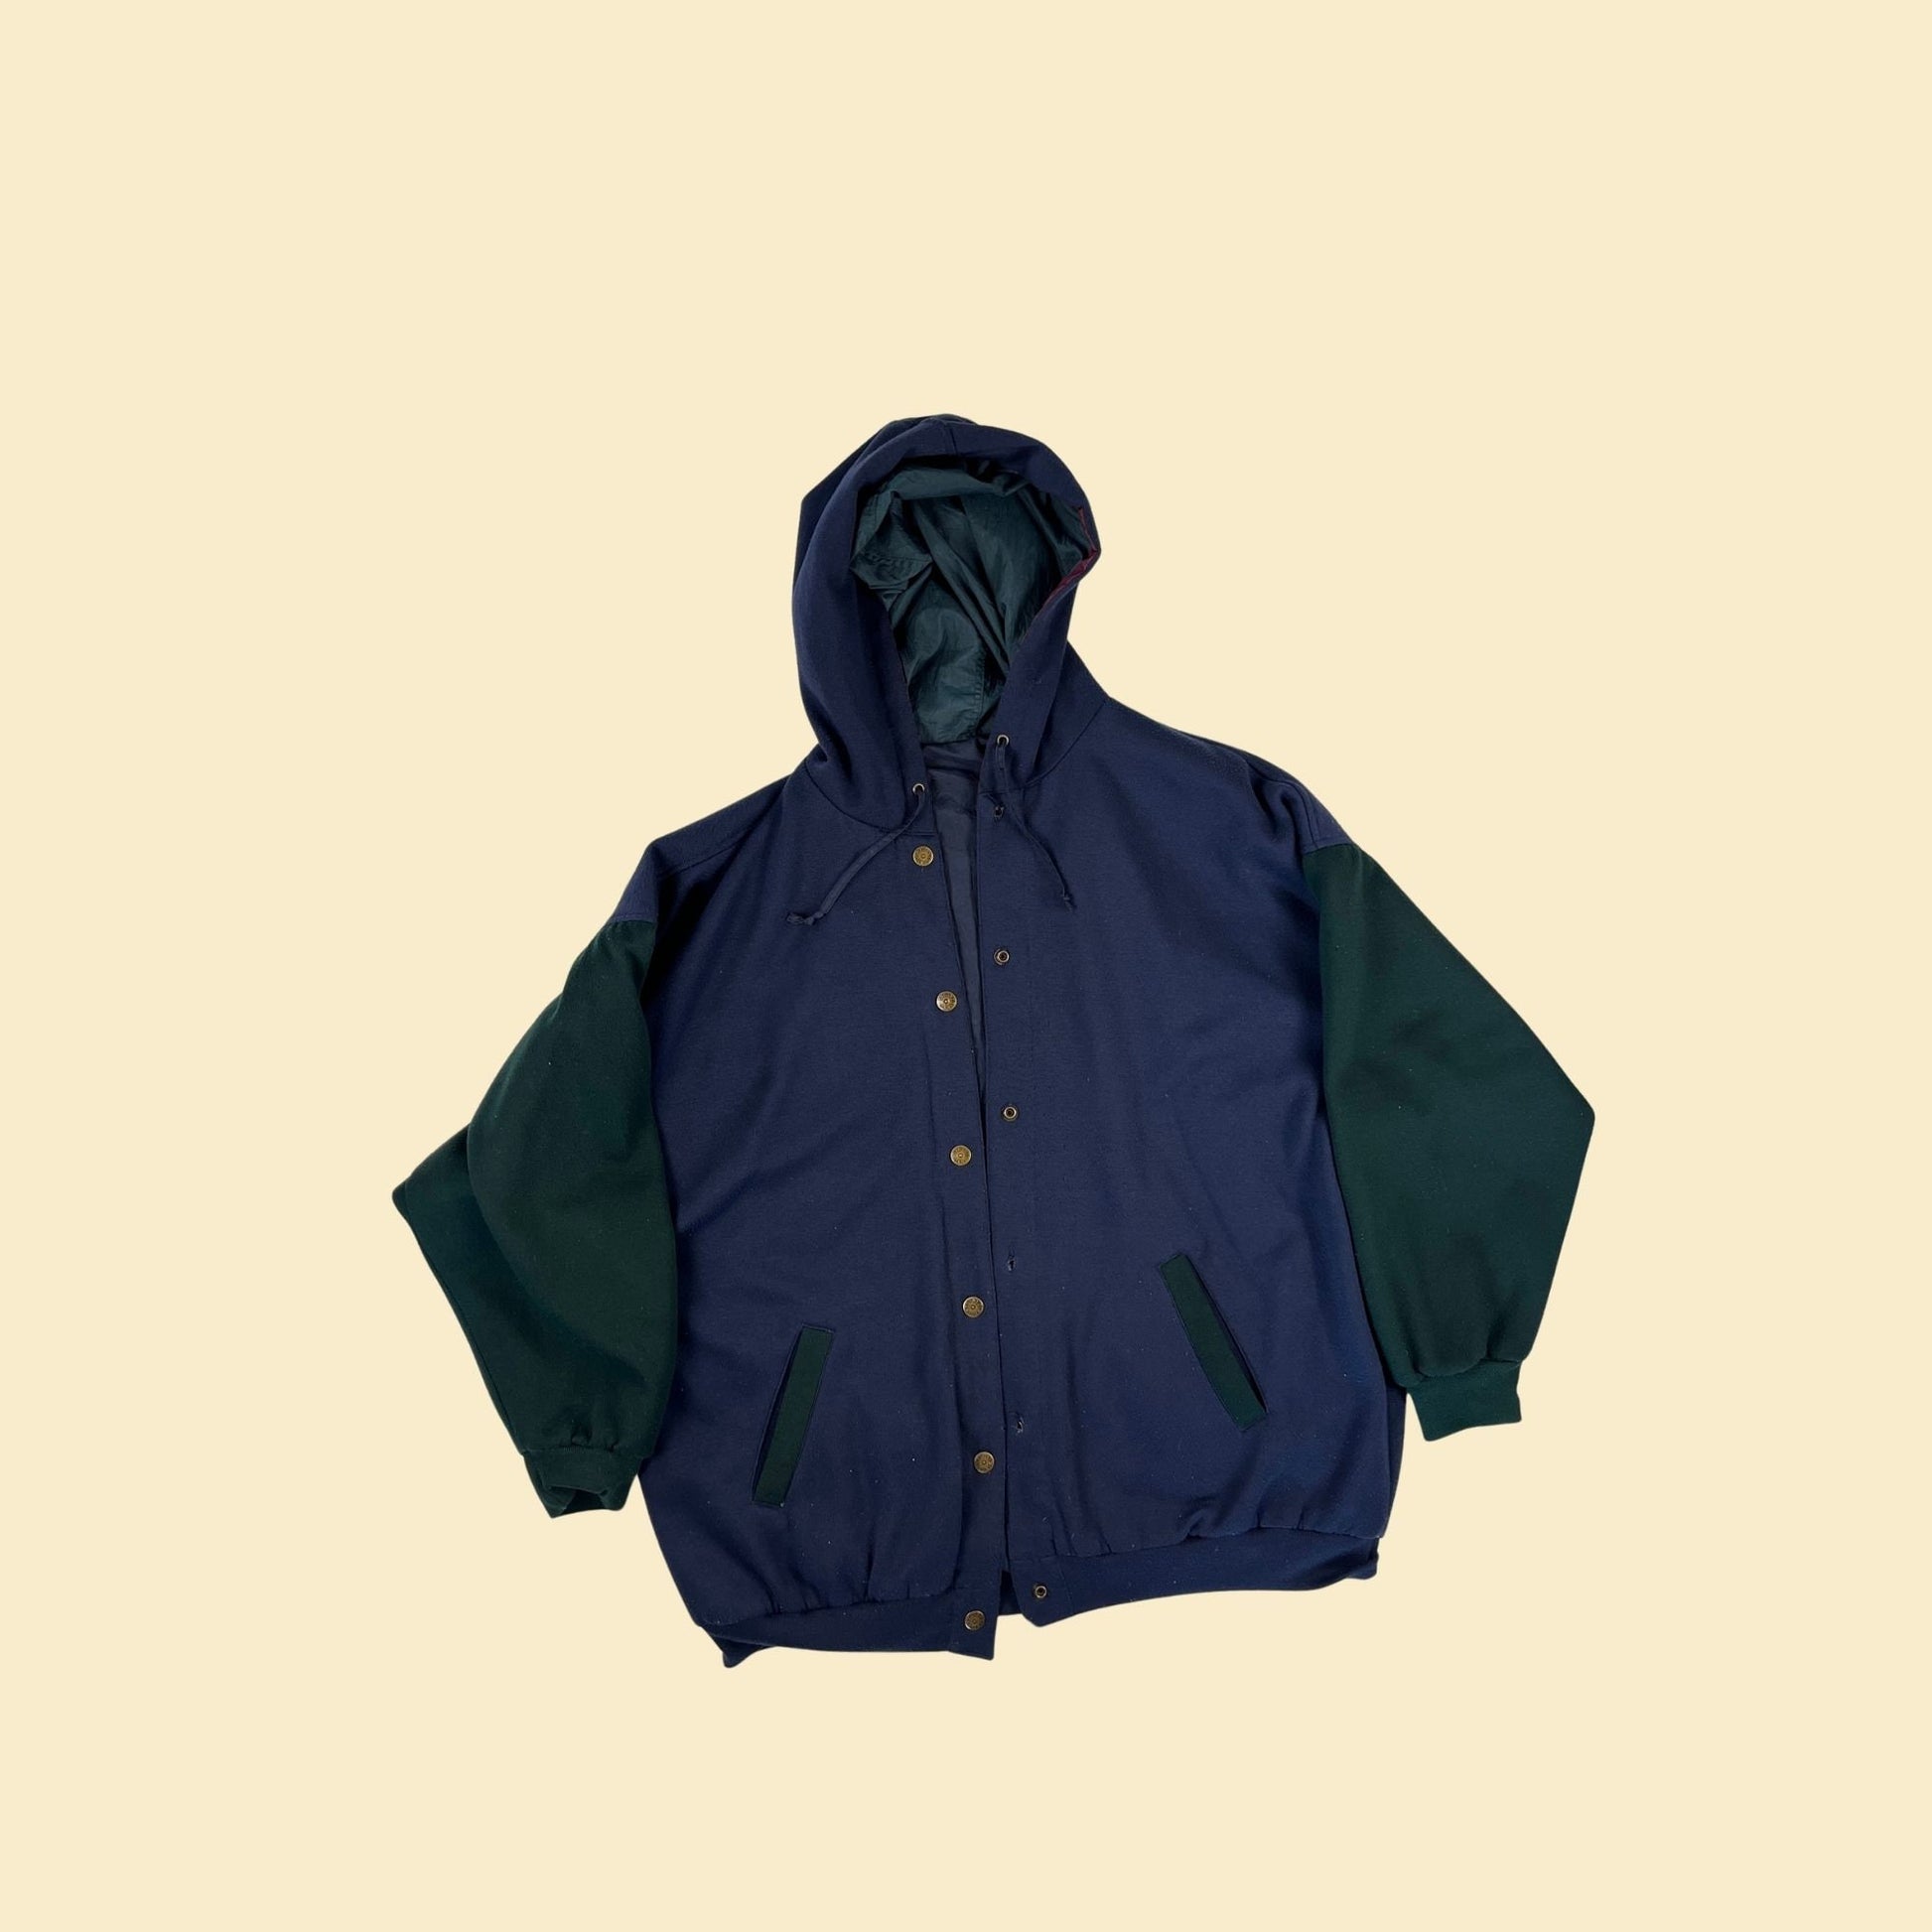 90s reversible windbreaker jacket by NYG, vintage 1990s colorblock burgundy, green & blue snap clasp jacket